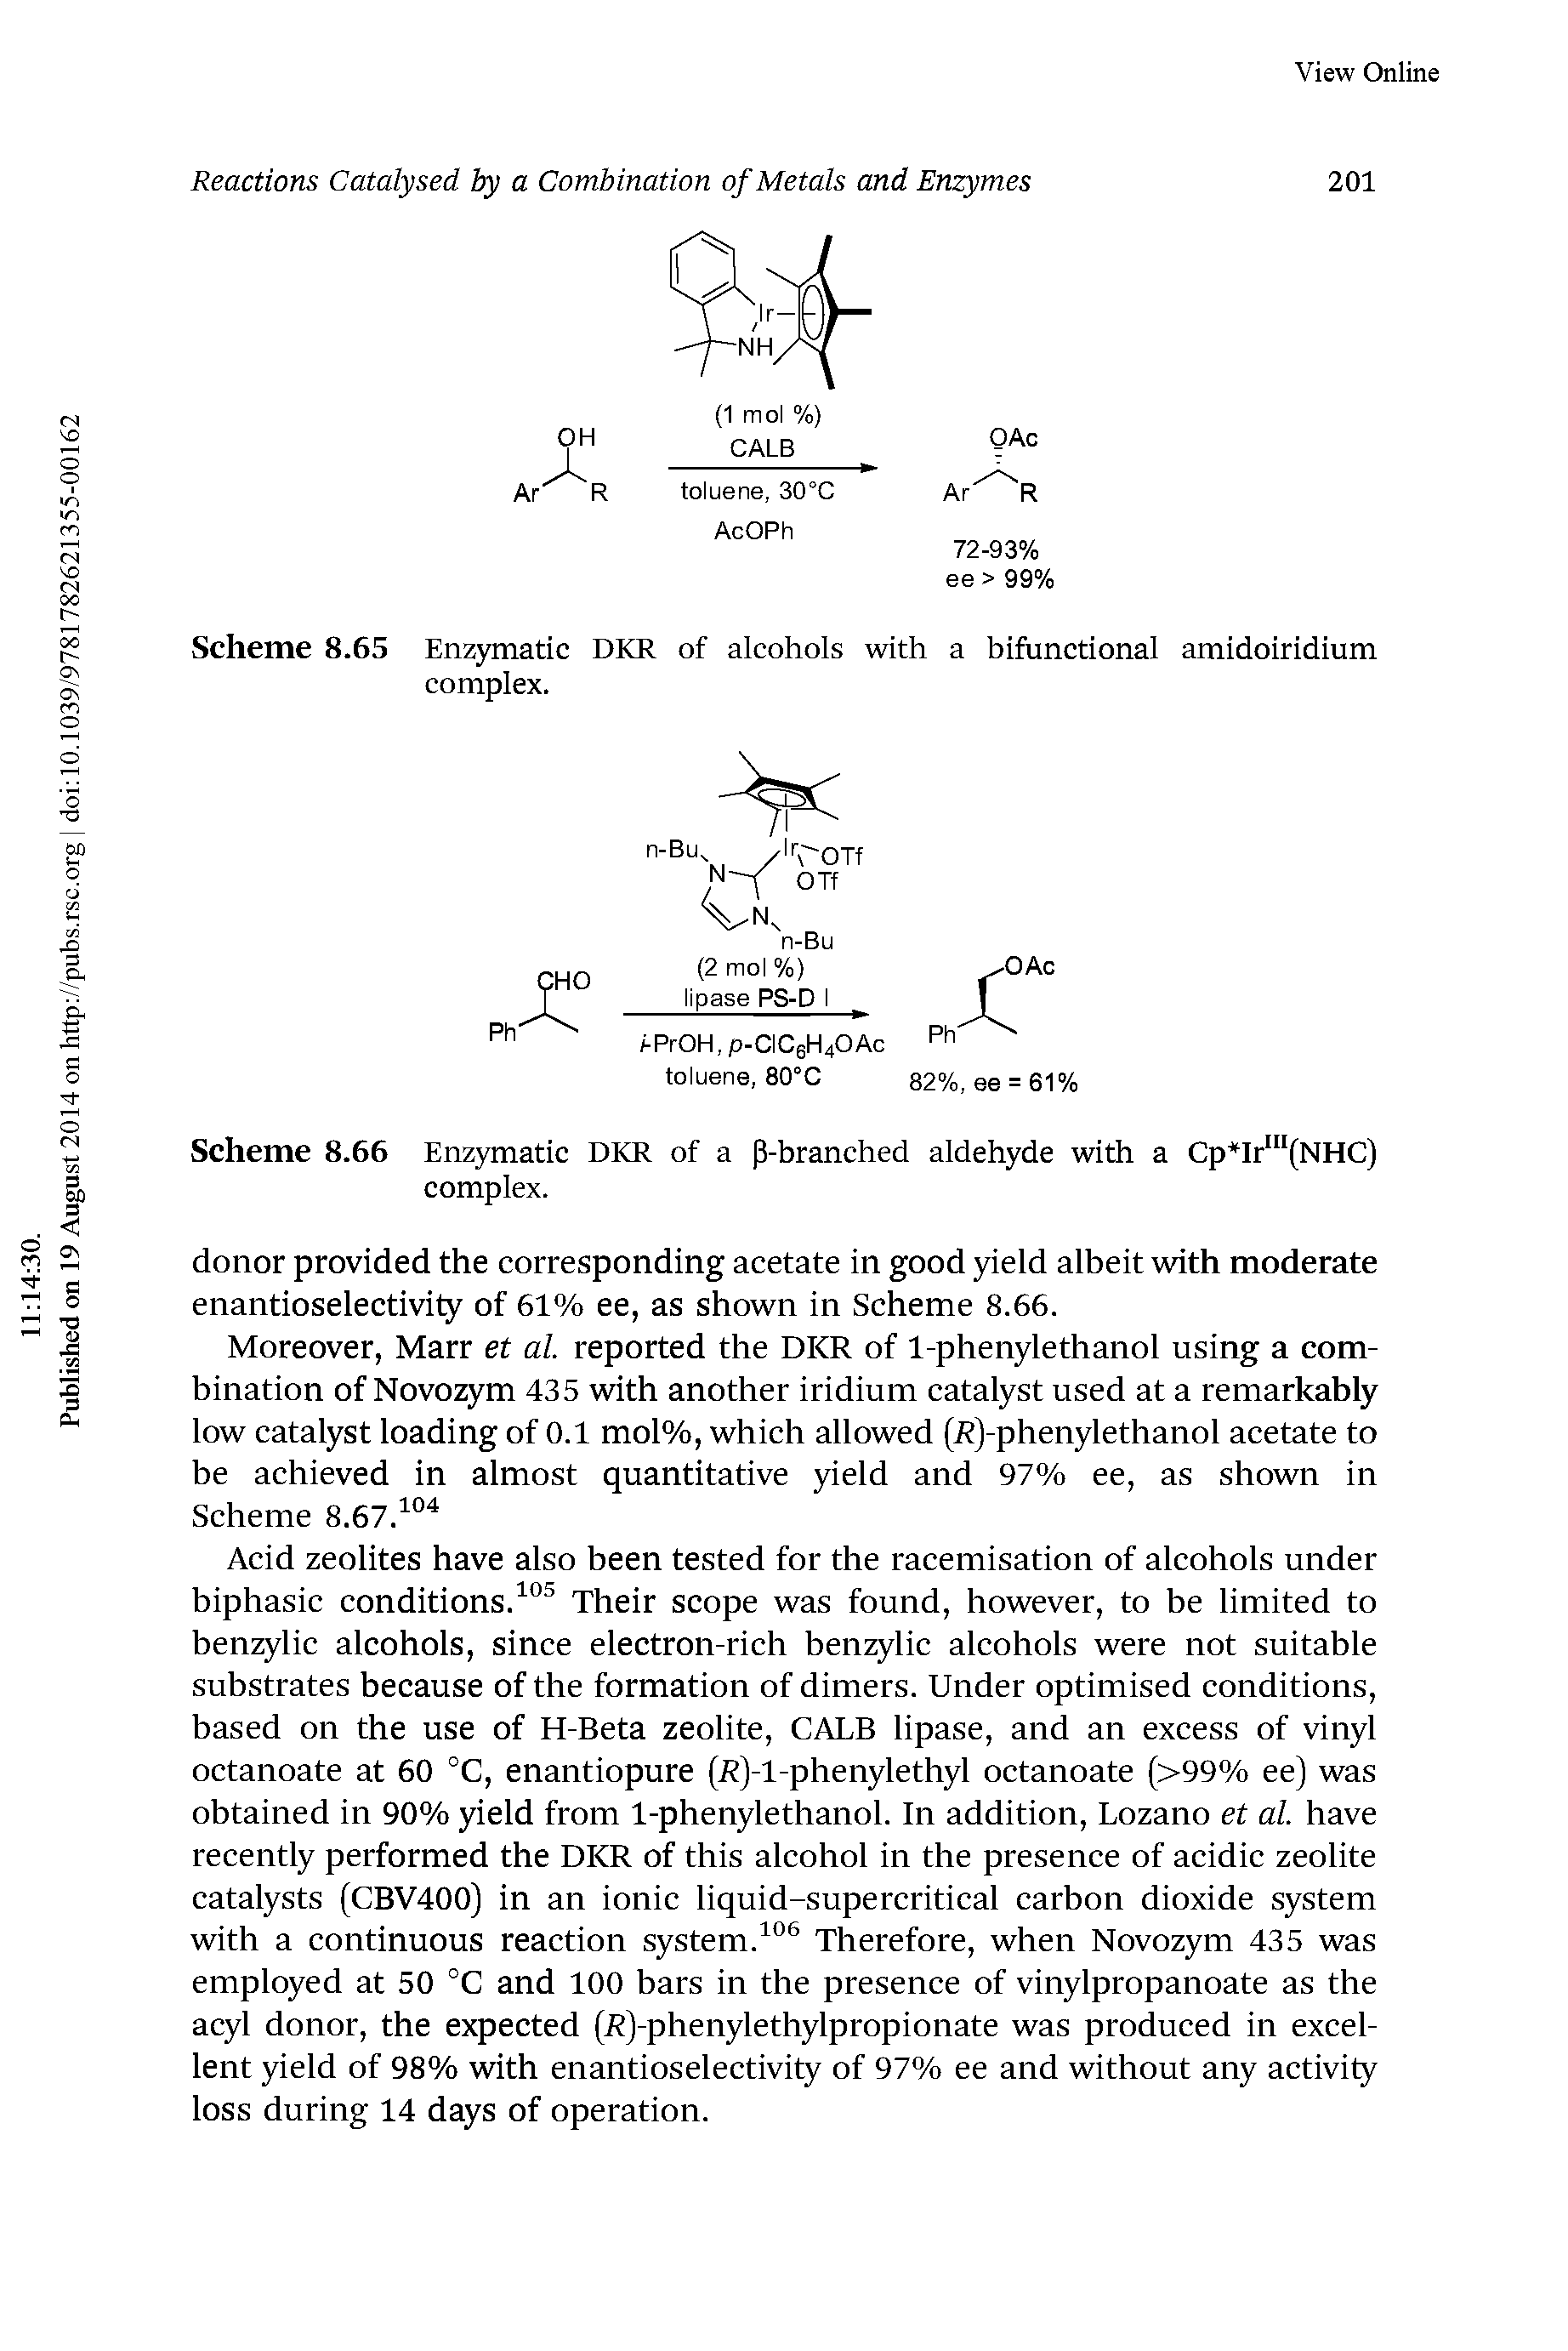 Scheme 8.65 Enzymatic DKR of alcohols with a bifunctional amidoiridium complex.